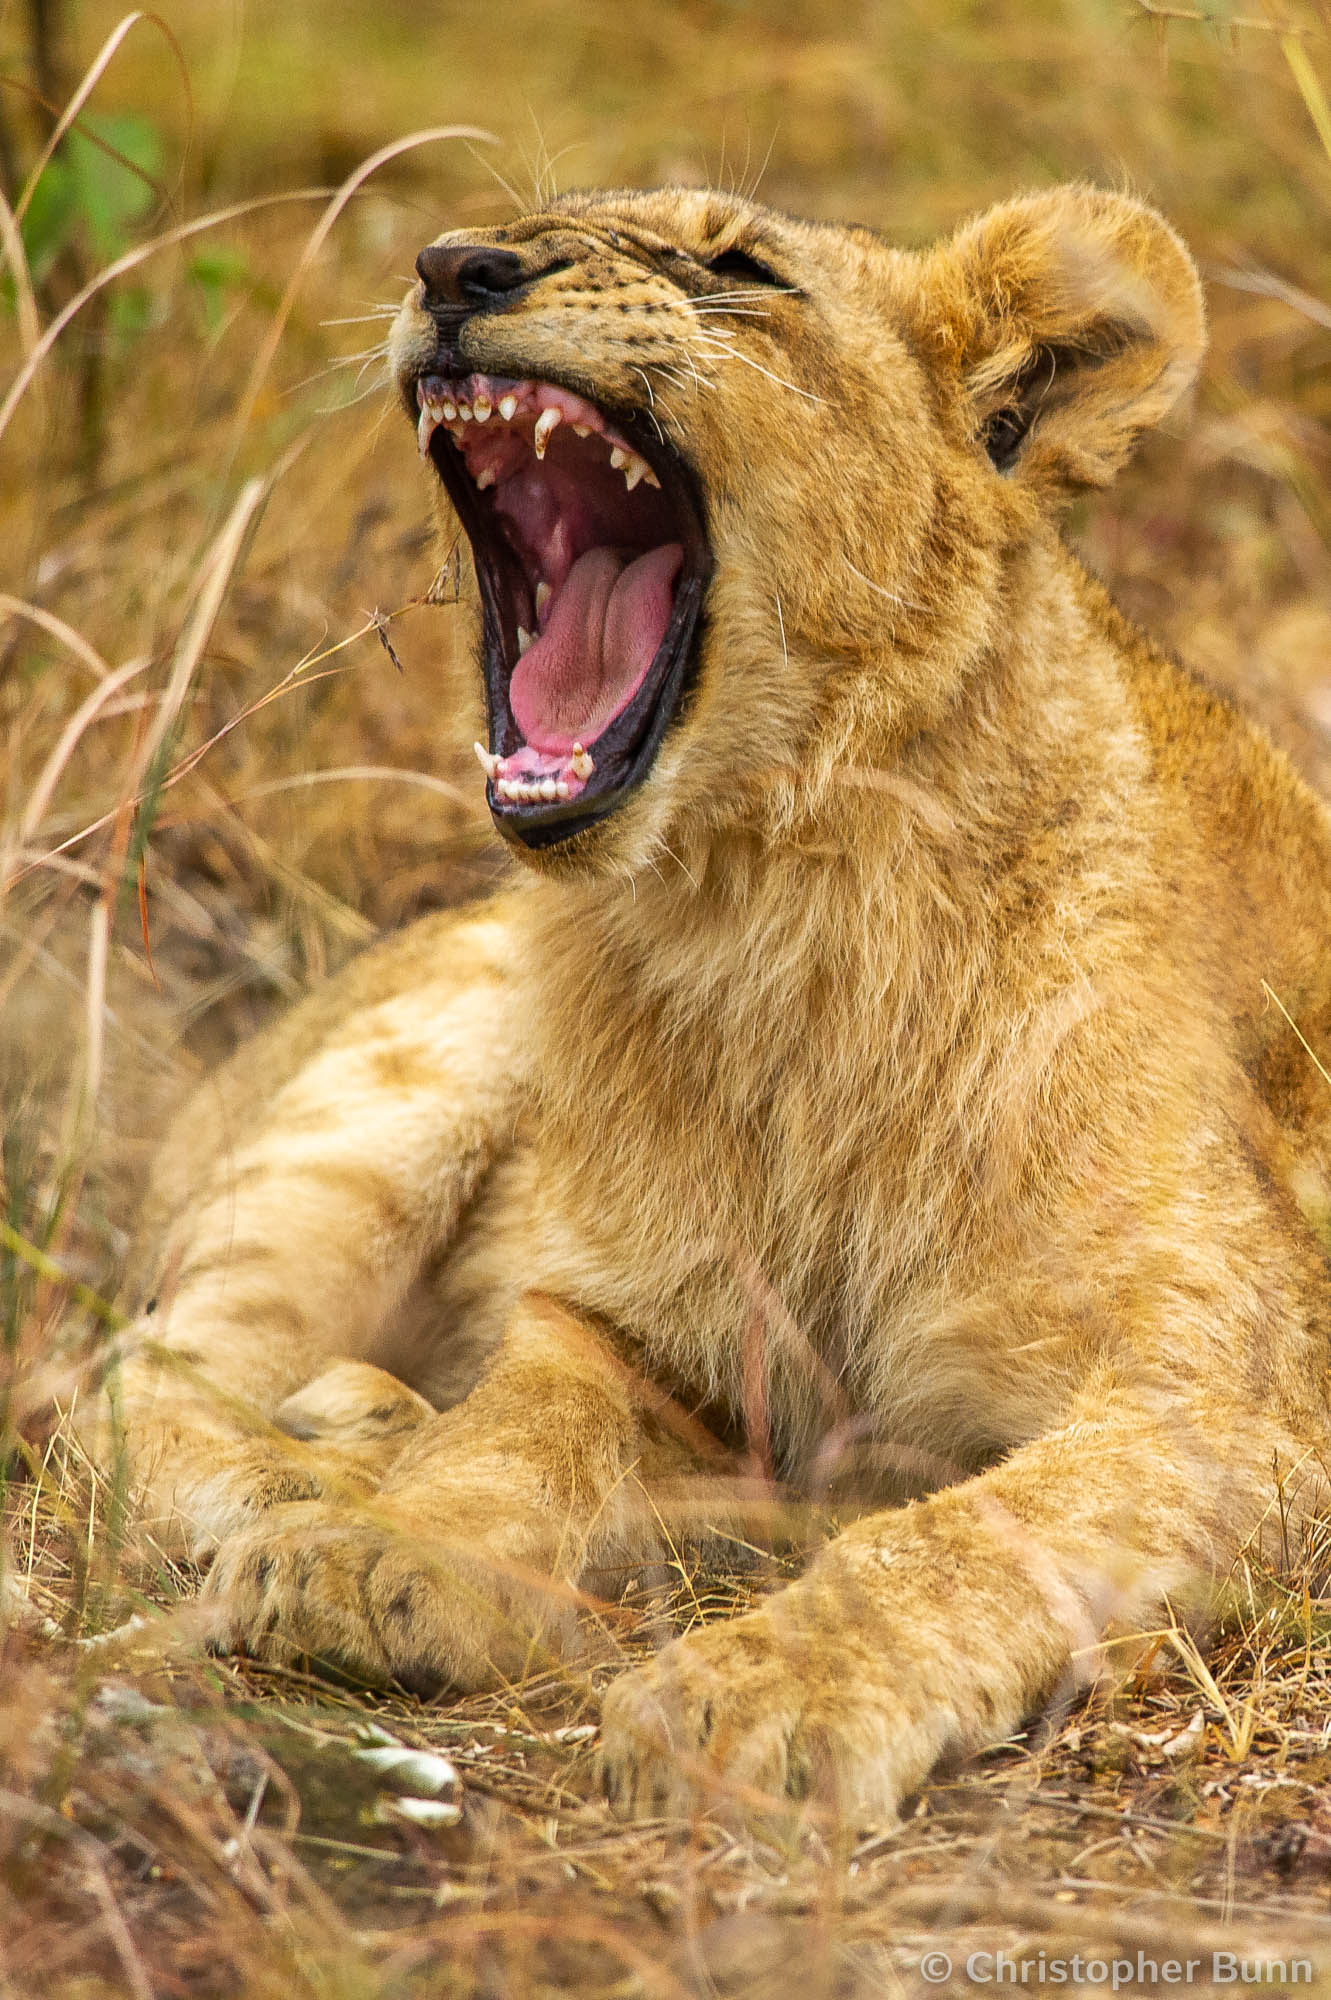 A young lion in Nairobi National Park, Kenya.